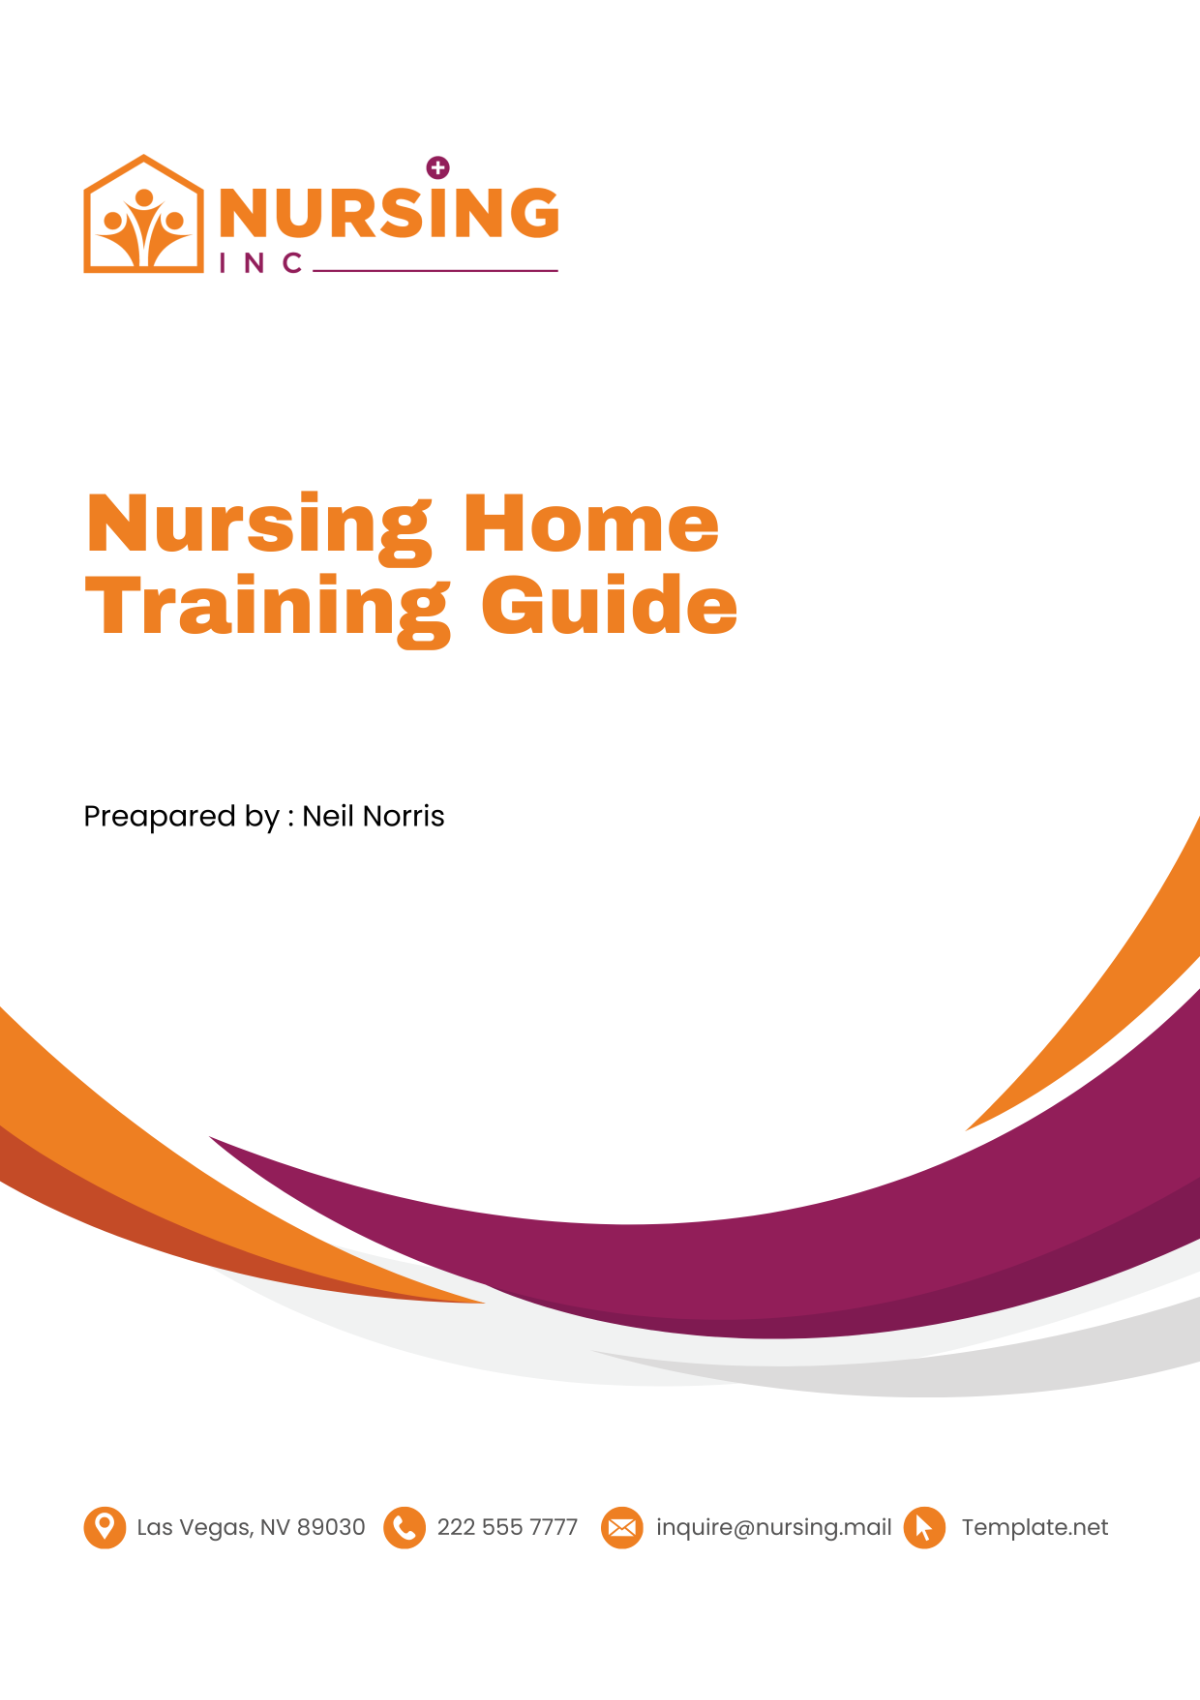 Nursing Home Training Guide Template